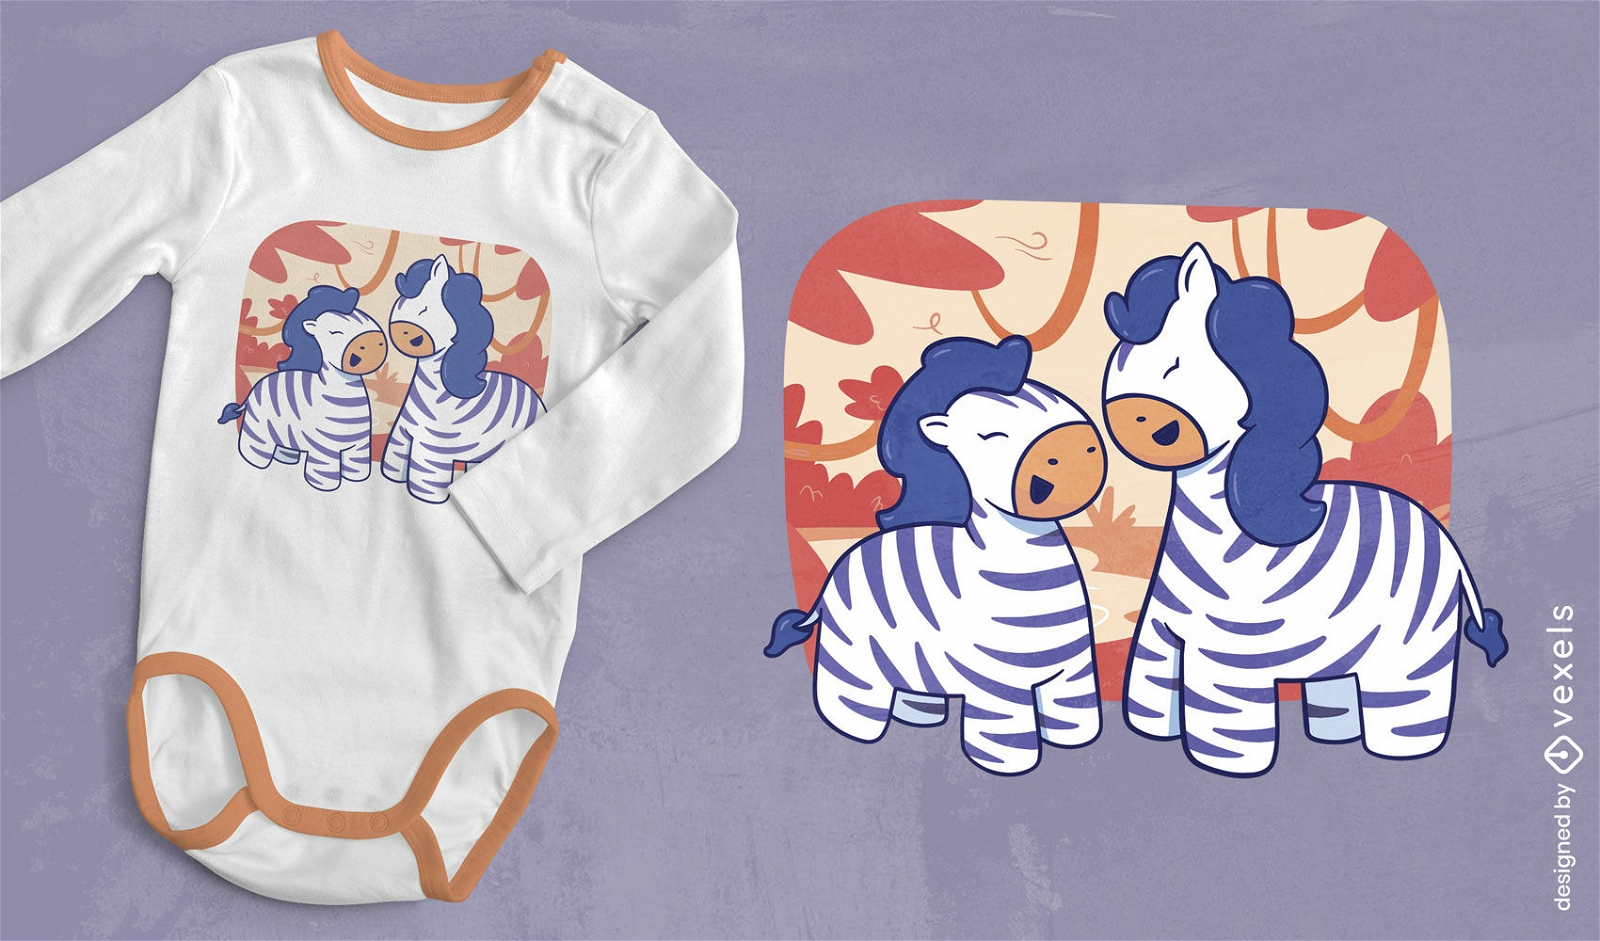 Zebra sisters t-shirt design